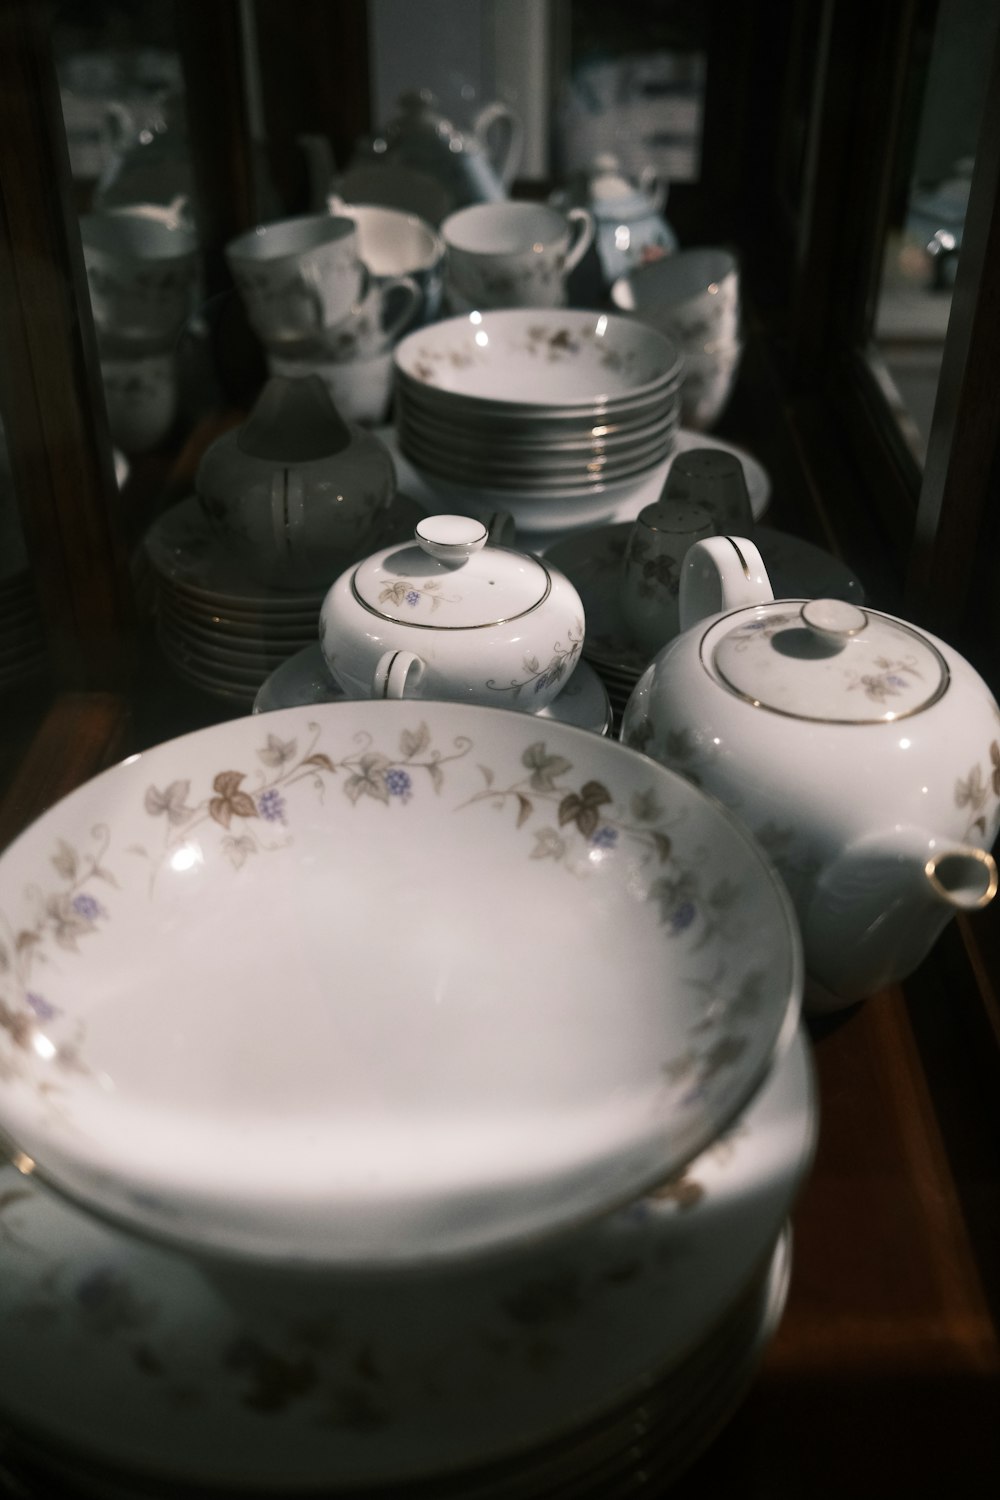 white ceramic plates on table photo – Free Pottery Image on Unsplash